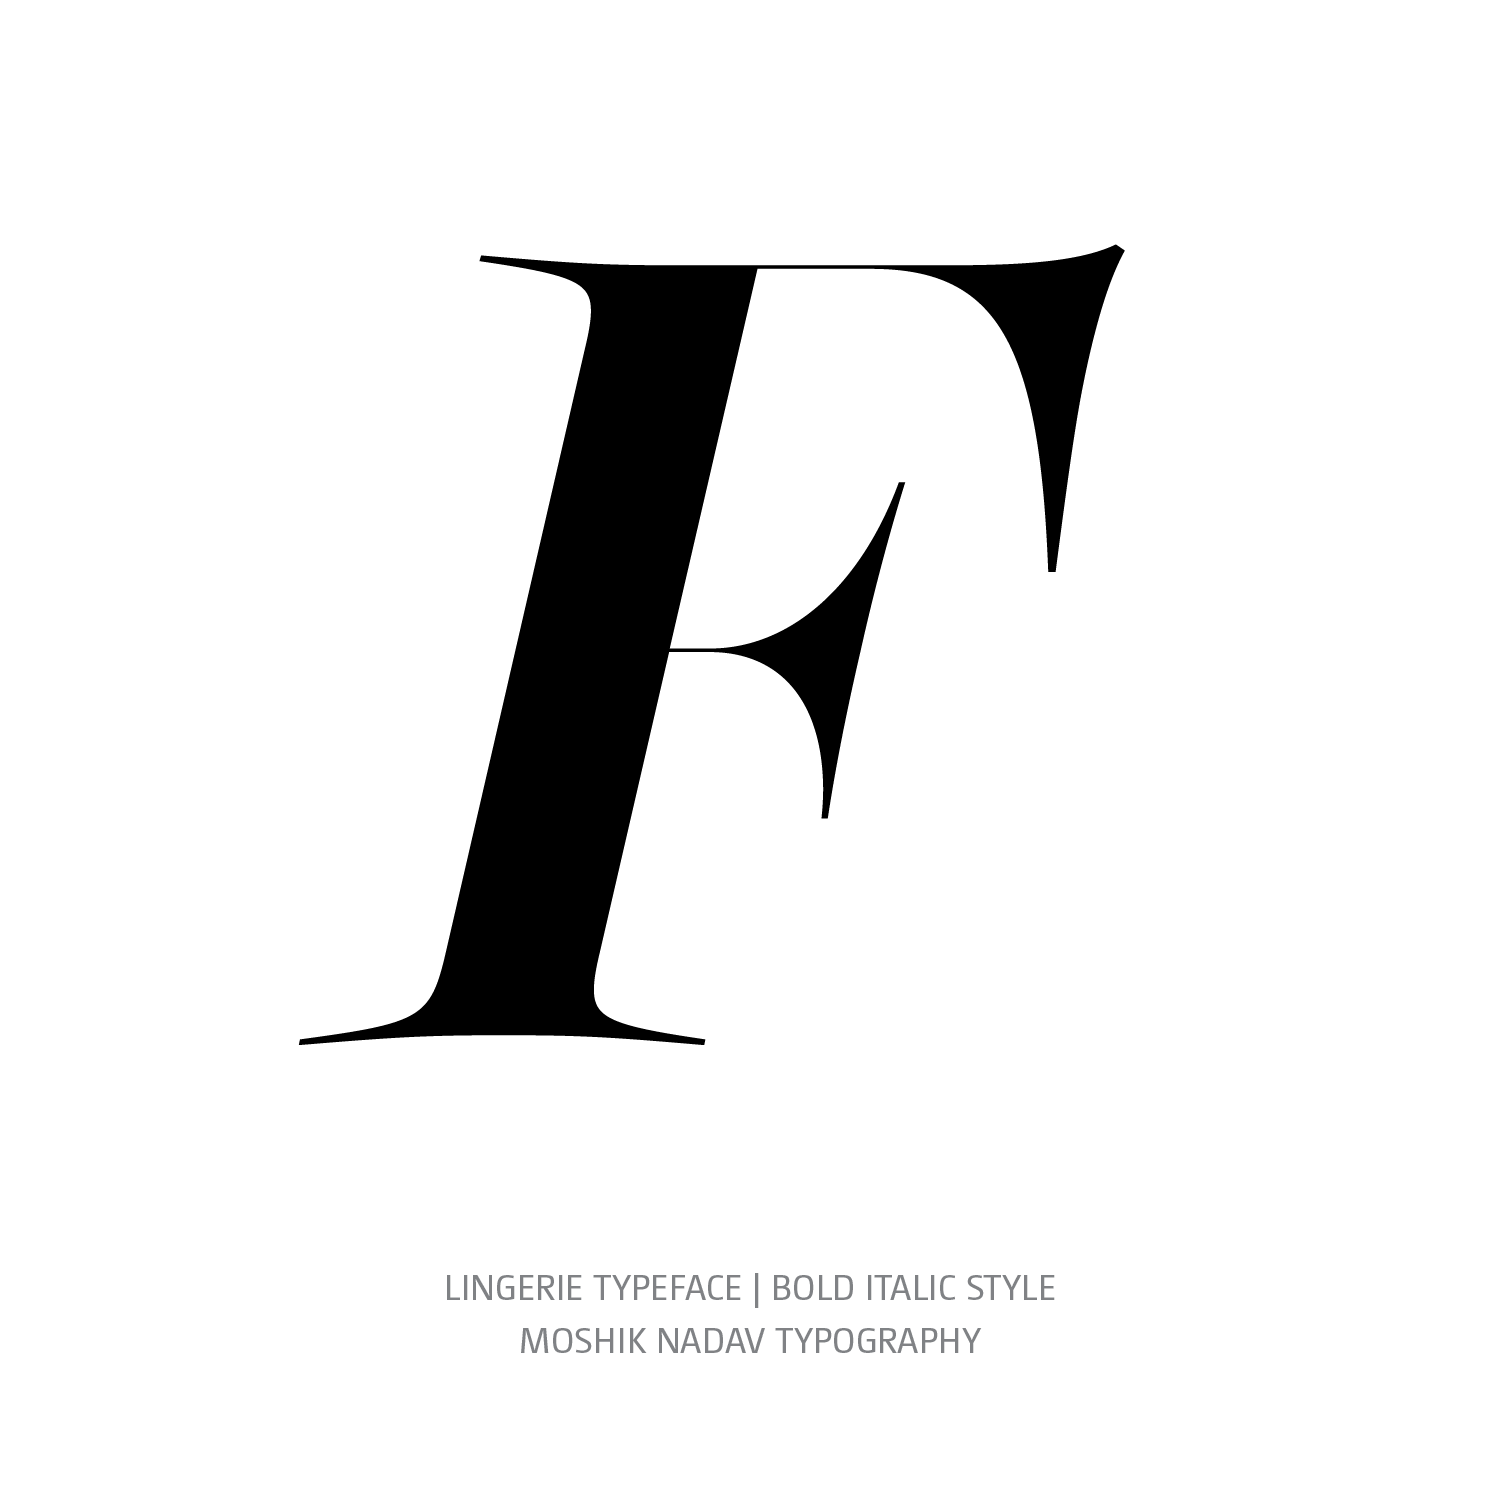 Lingerie Typeface Bold Italic F